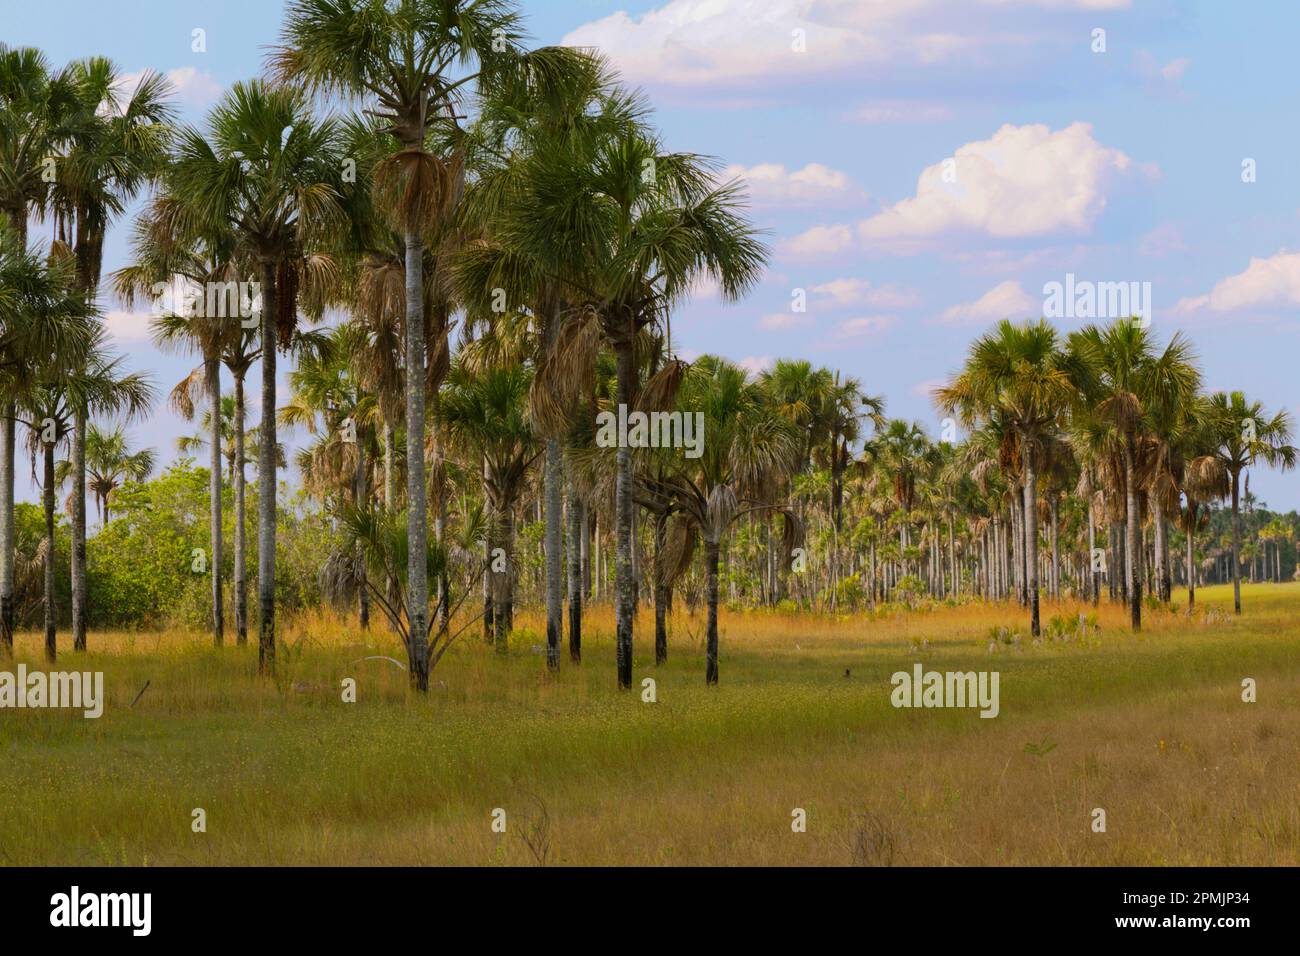 Brazil, Grande Sertão Veredas National Park: Vereda, a grassland ecosystem on seasonally waterlogged soil with stands of  buriti palms on wetter spots. Stock Photo